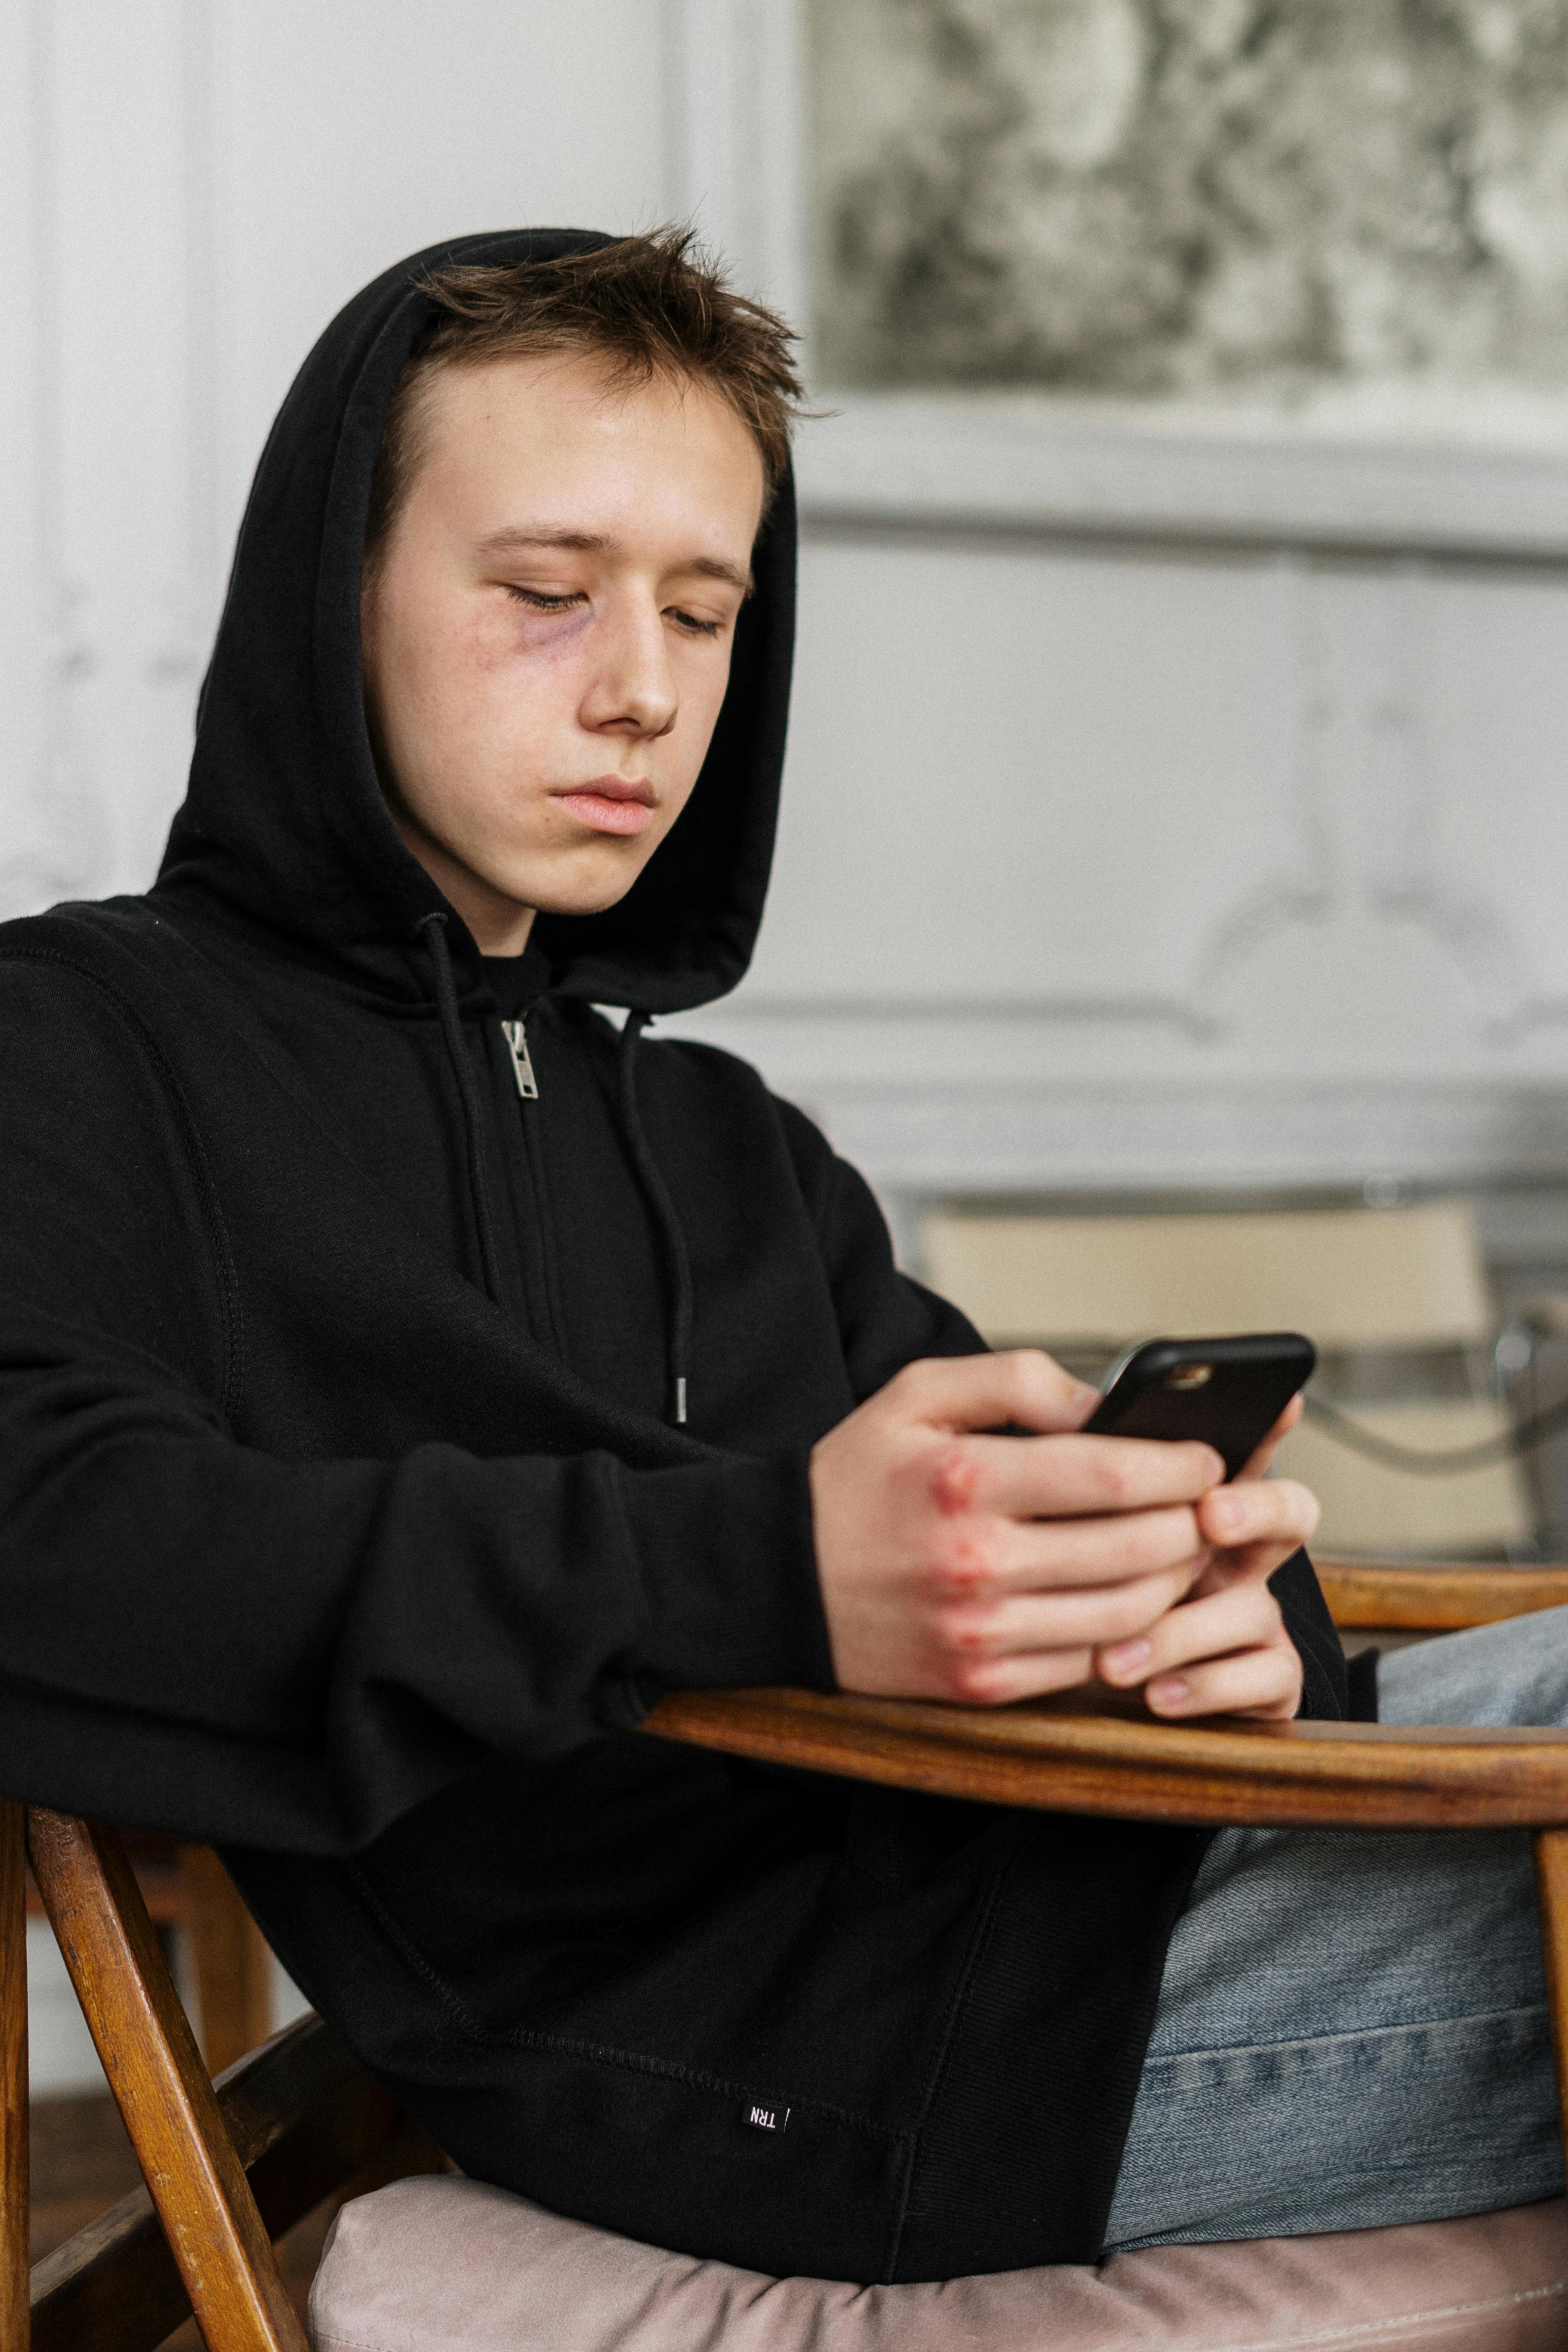 A teenage boy holding a phone | Source: Pexels